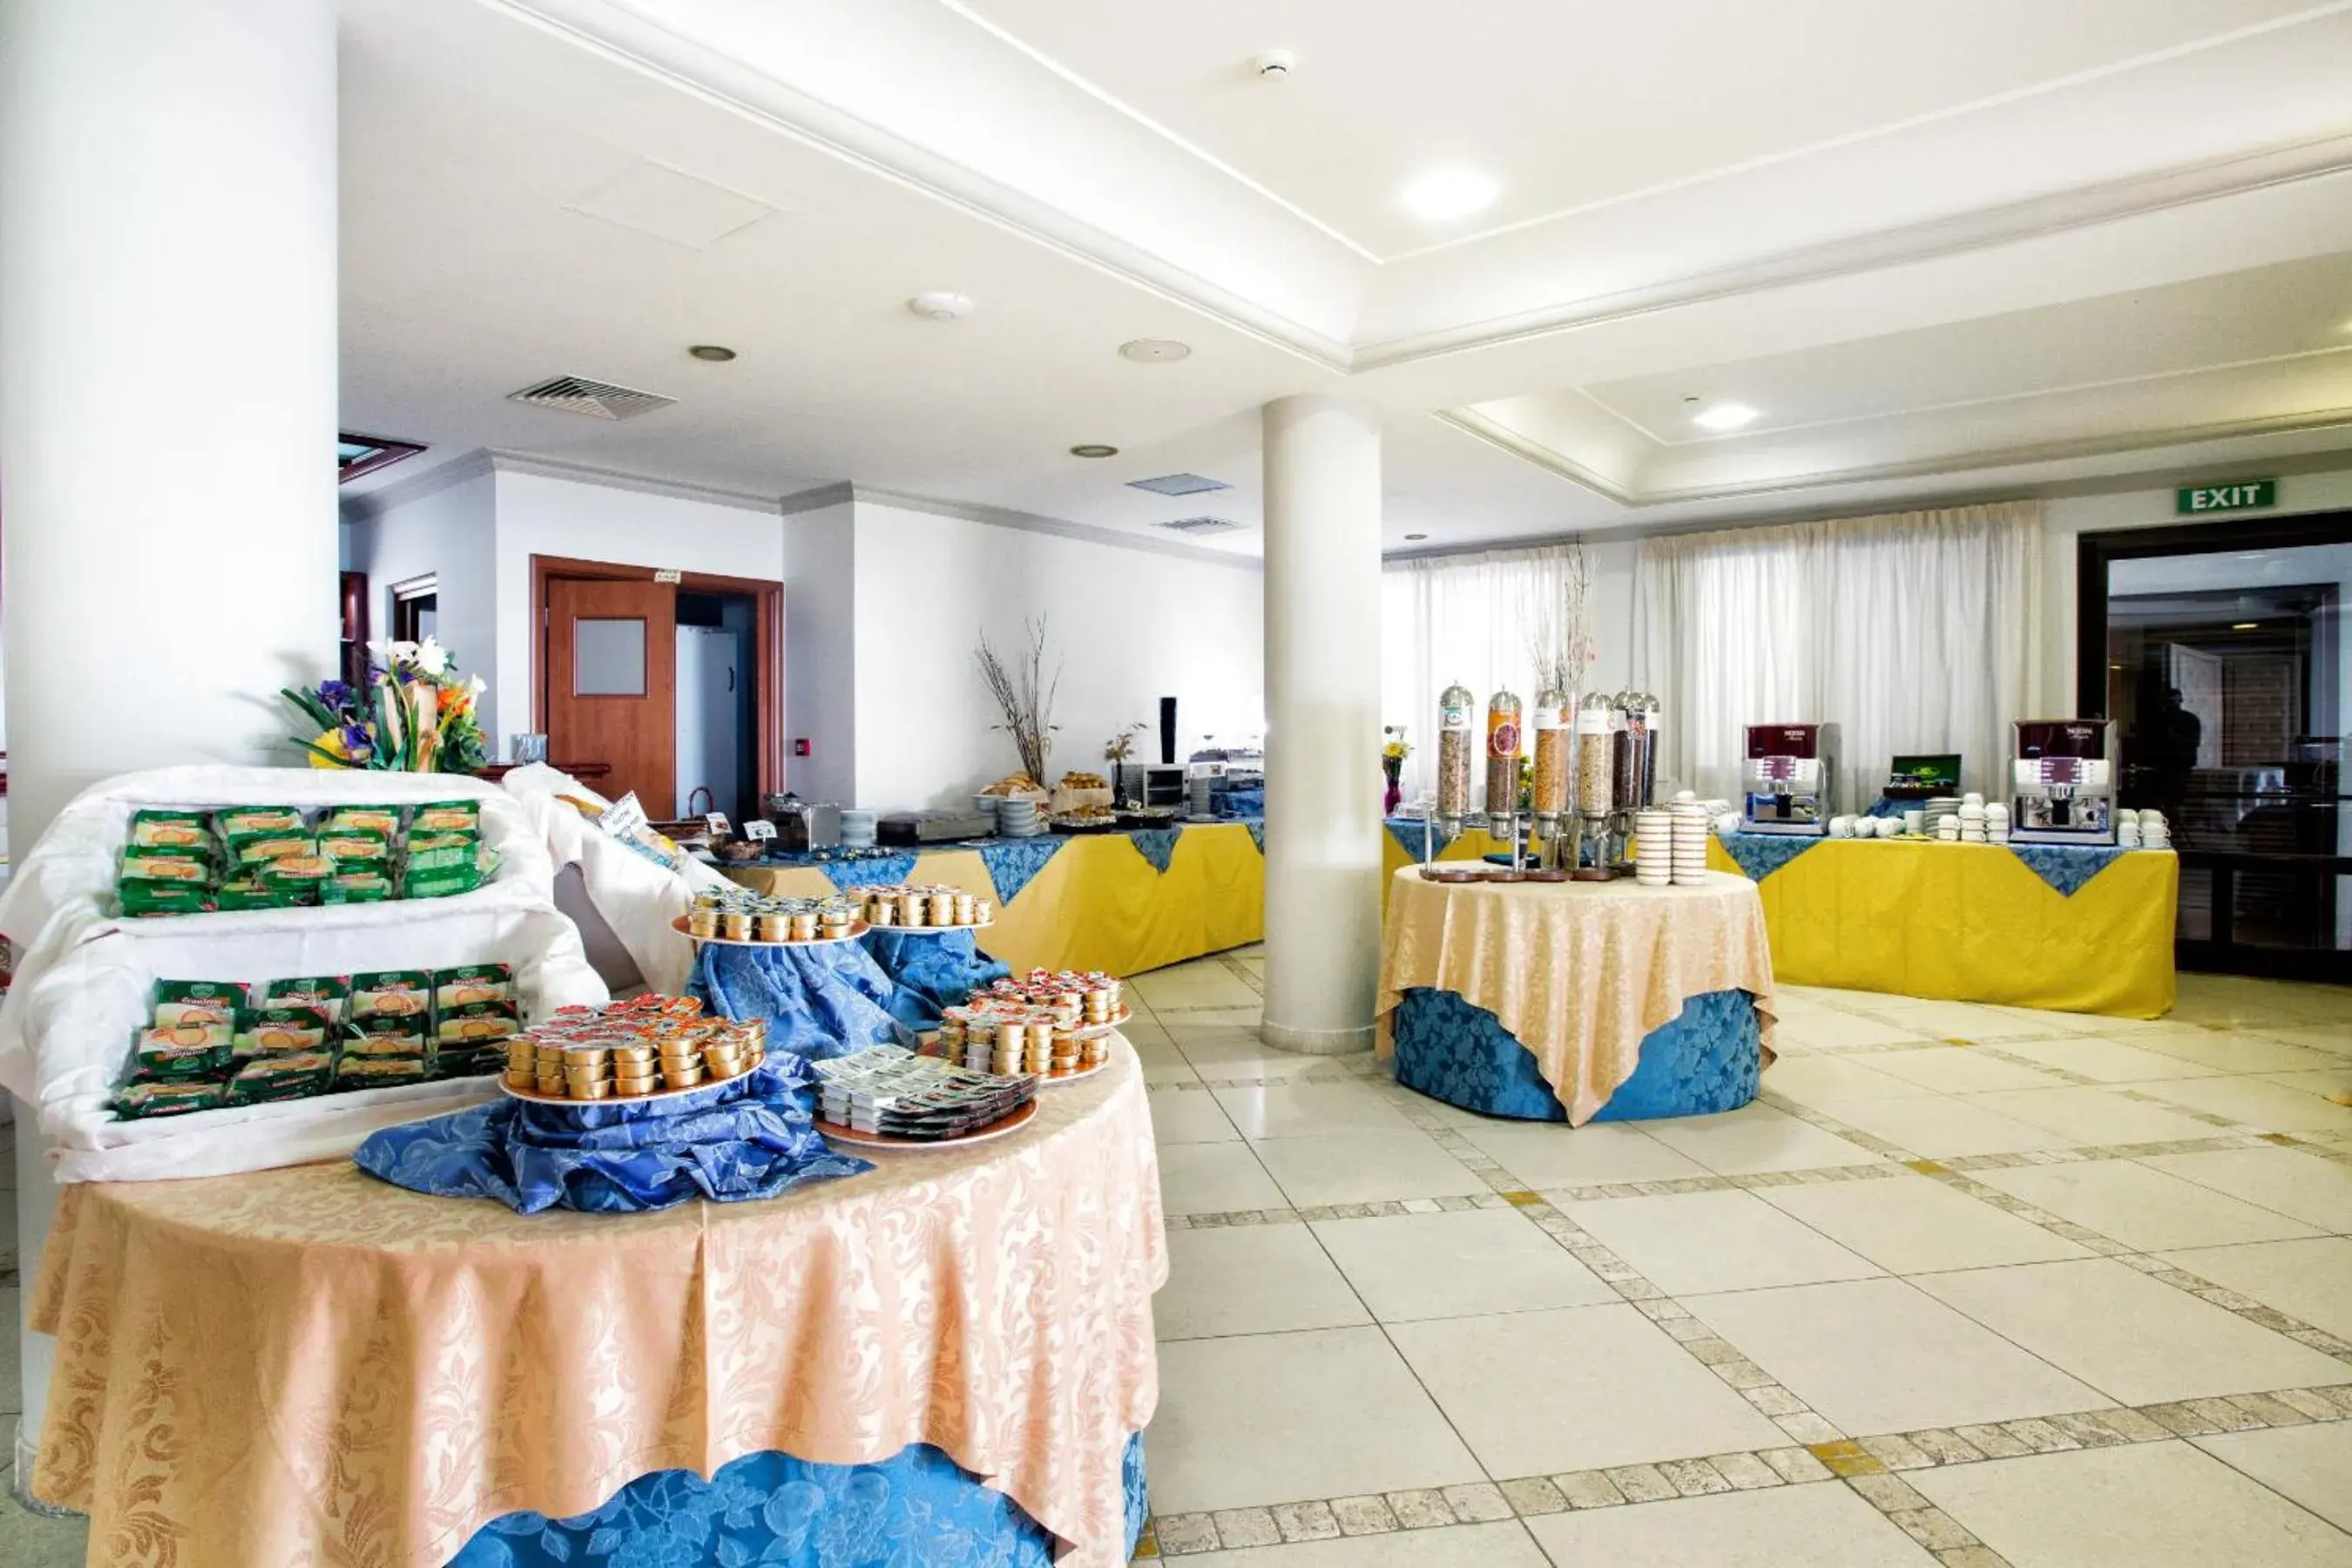 Buffet breakfast, Banquet Facilities in Hotel Tritone Lipari